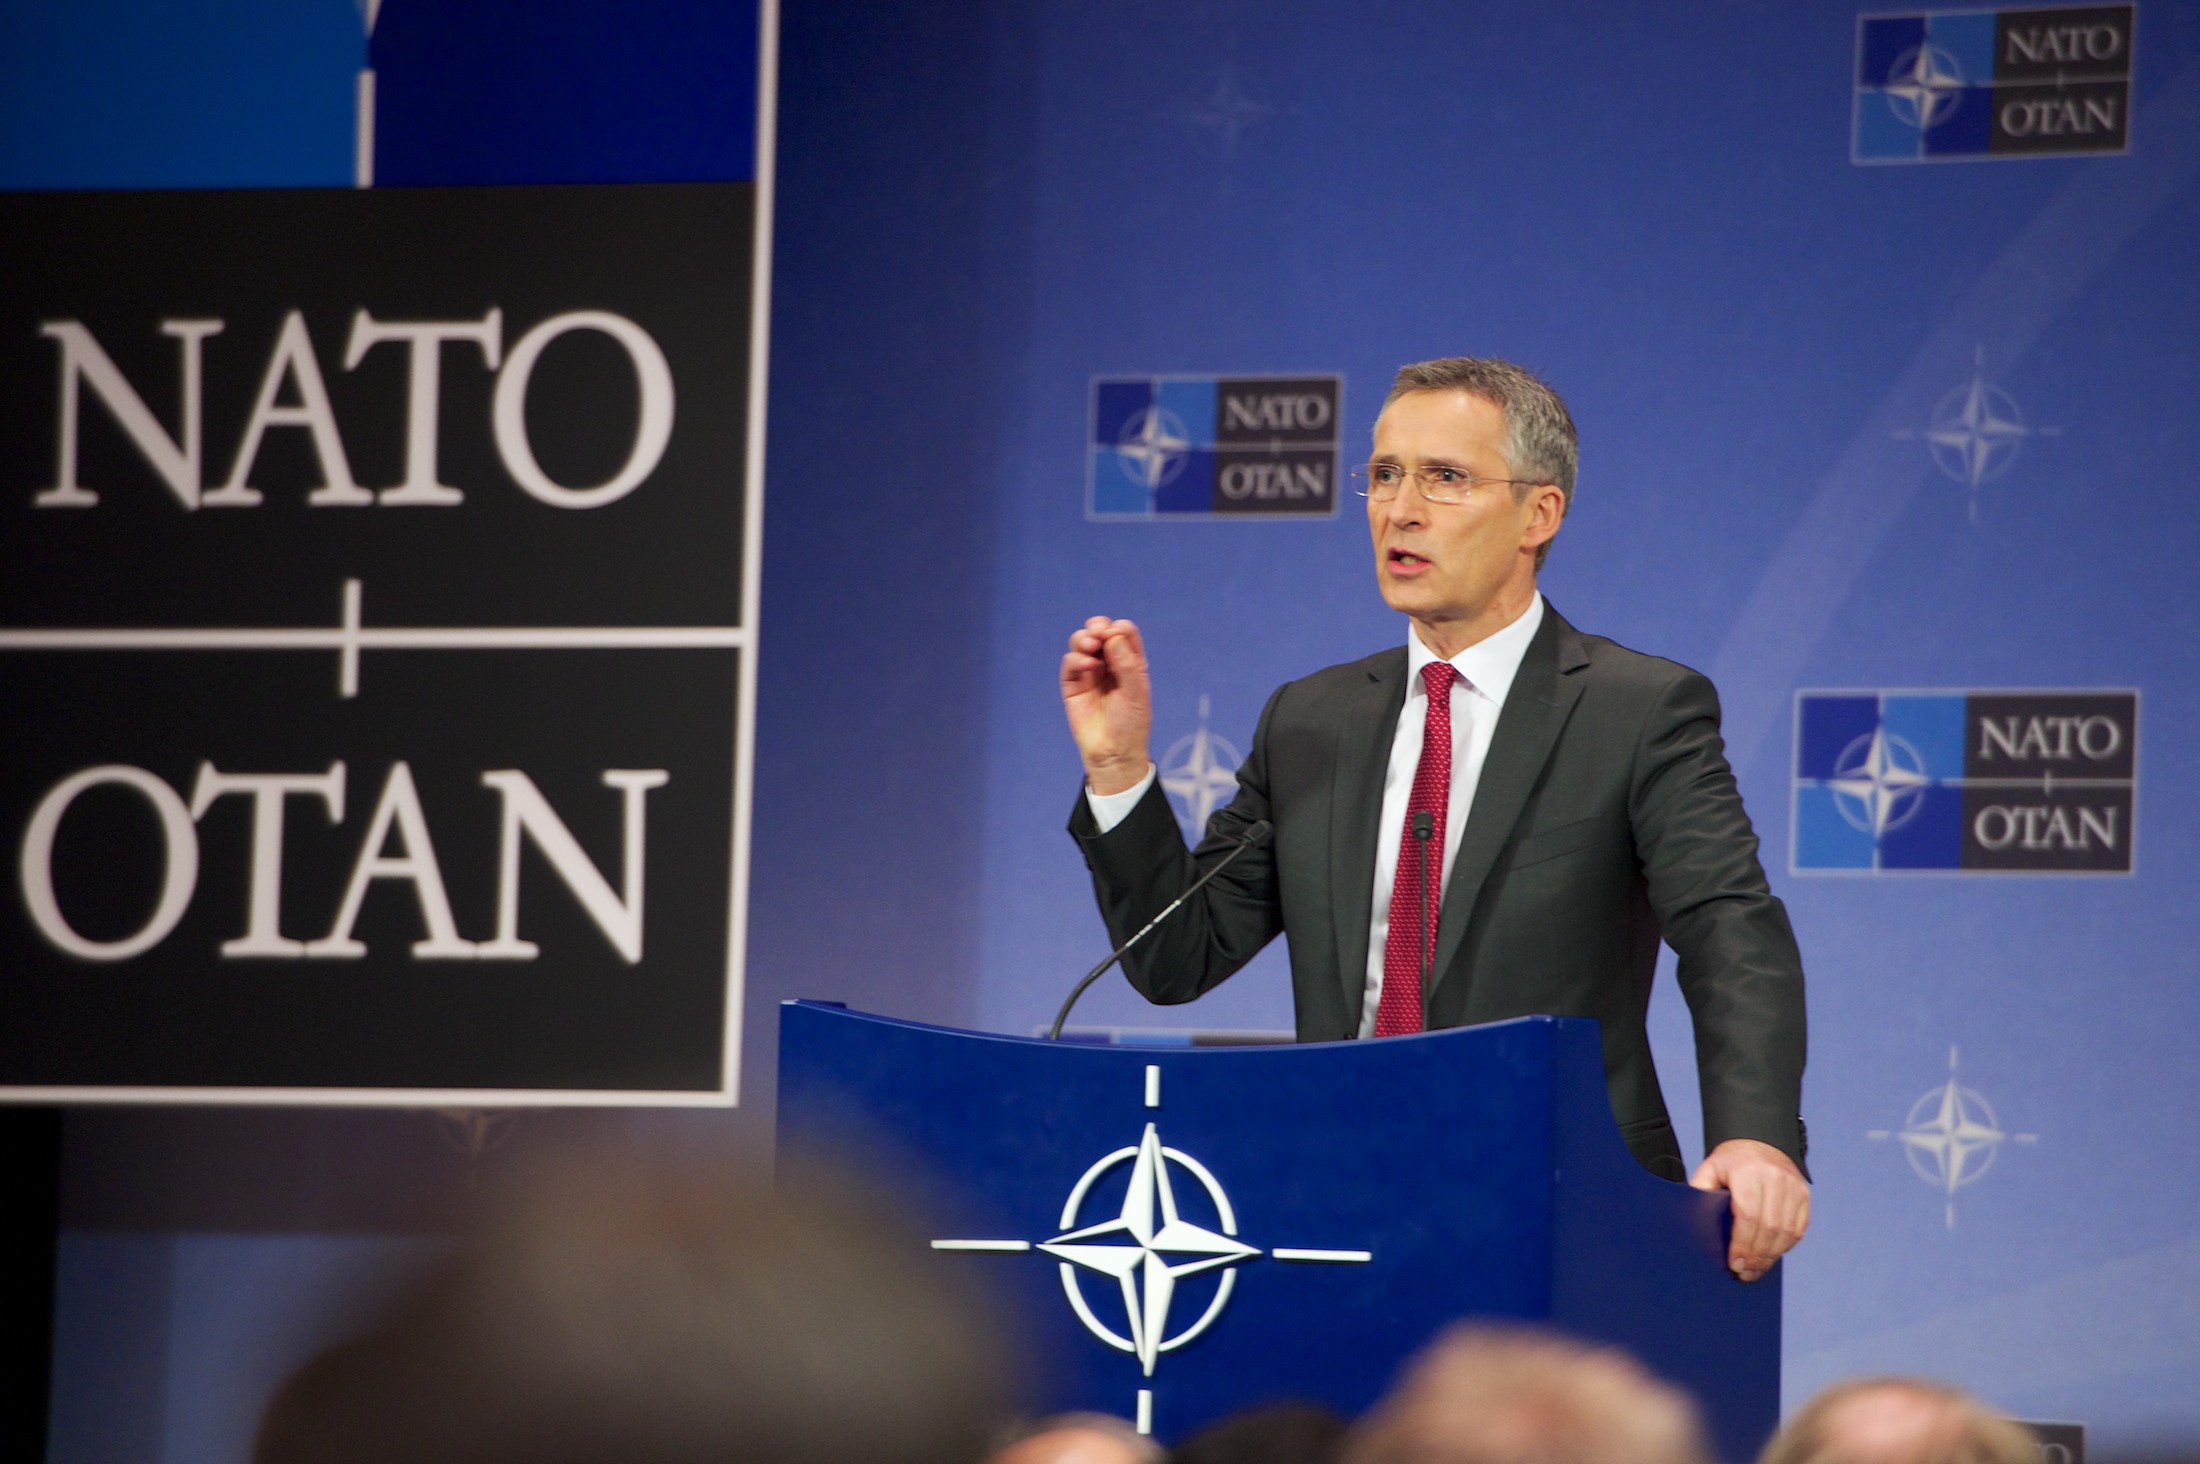 Pre-Ministerial press conference by NATO Secretary General Jens Stoltenberg